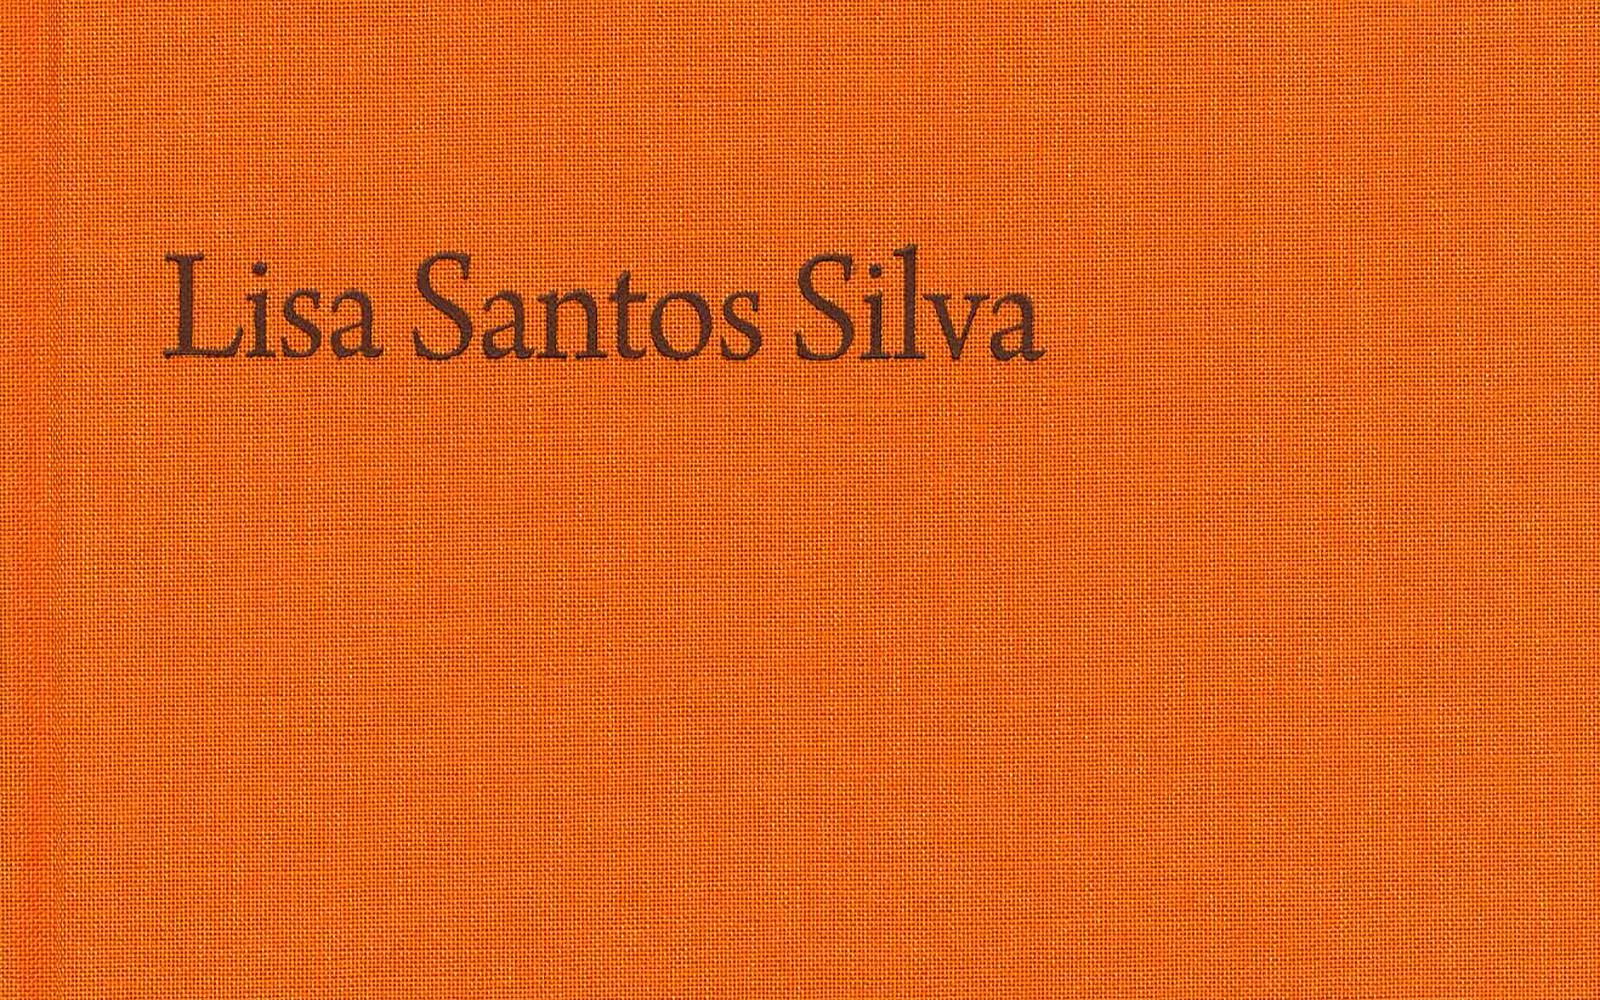 Lisa Santos Silva. Are you ready Lola?